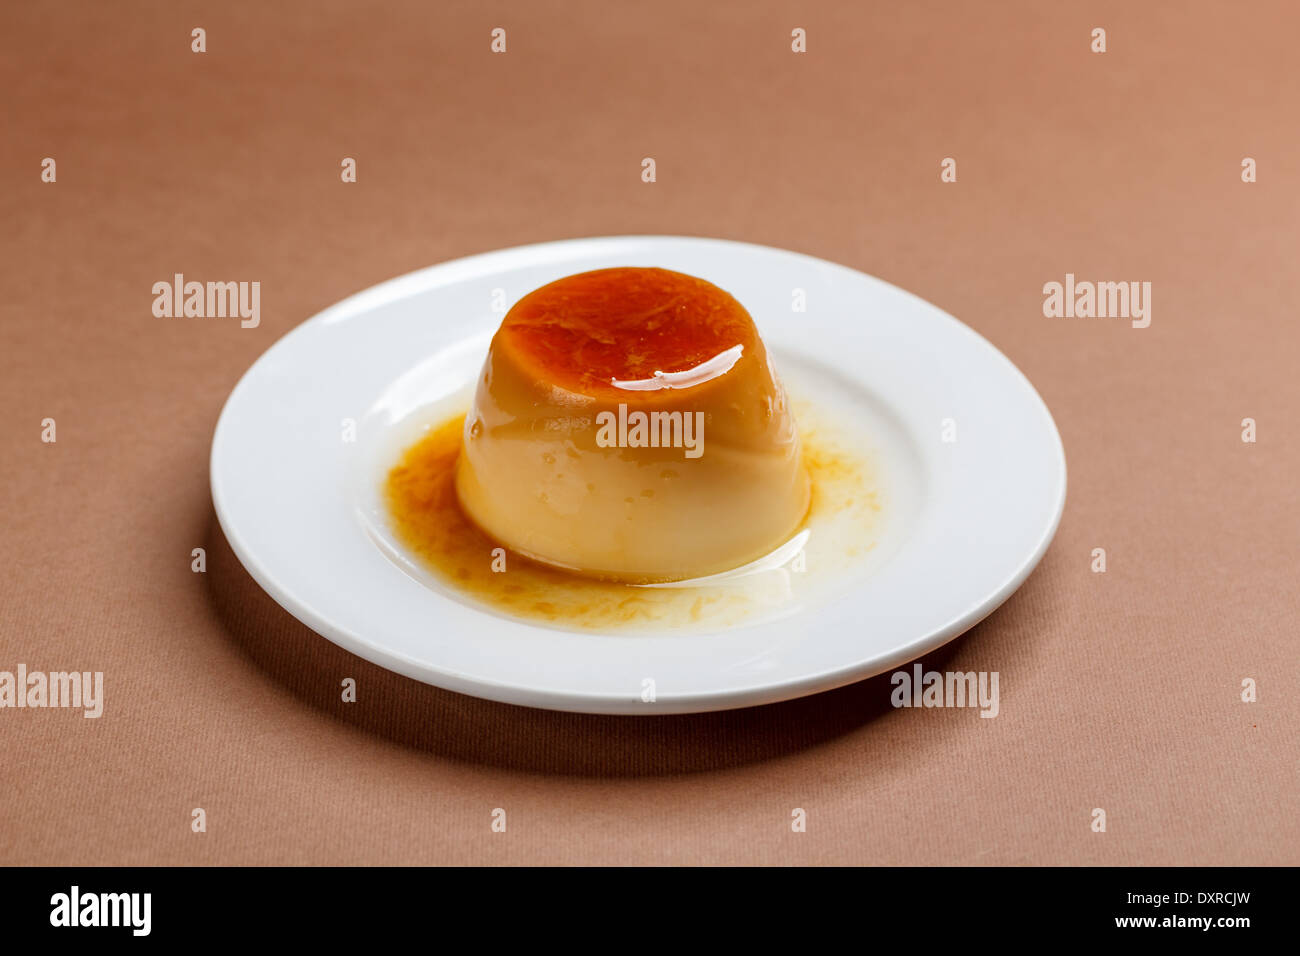 Creme caramel on white plate Stock Photo